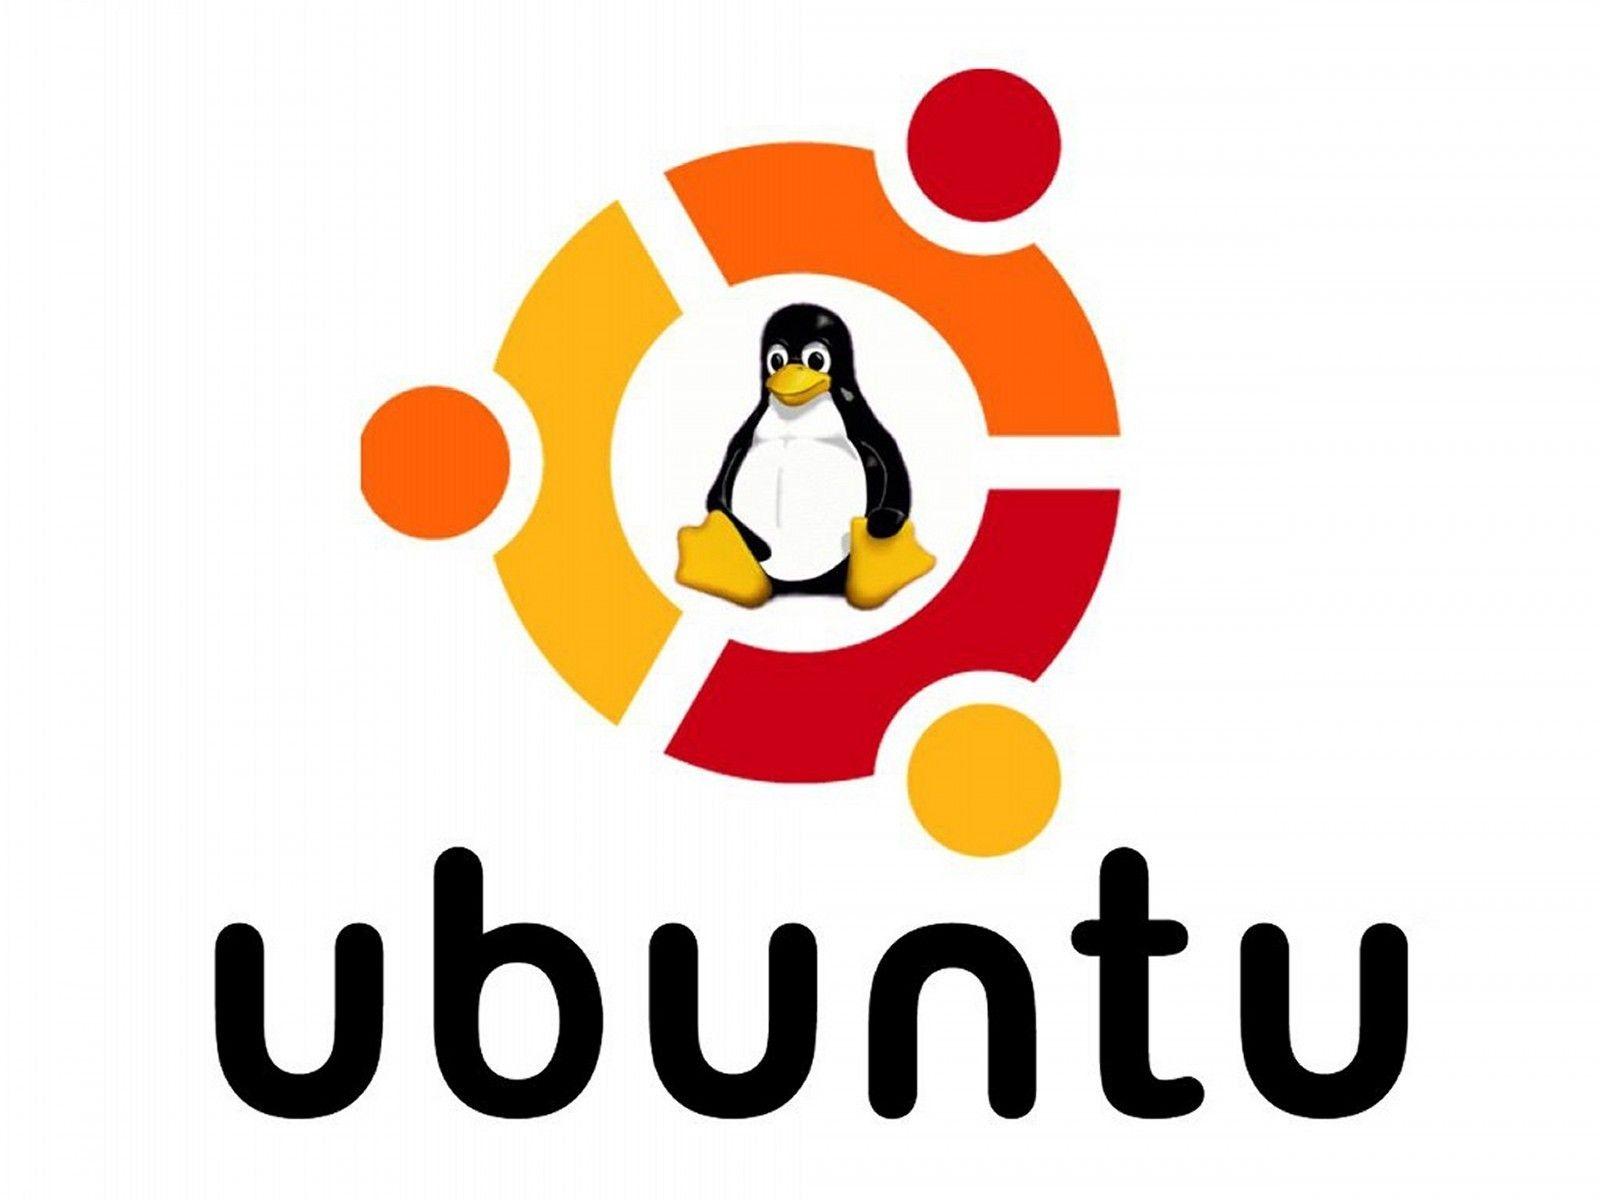 Linux Ubuntu Logo - Linux ubuntu Logos